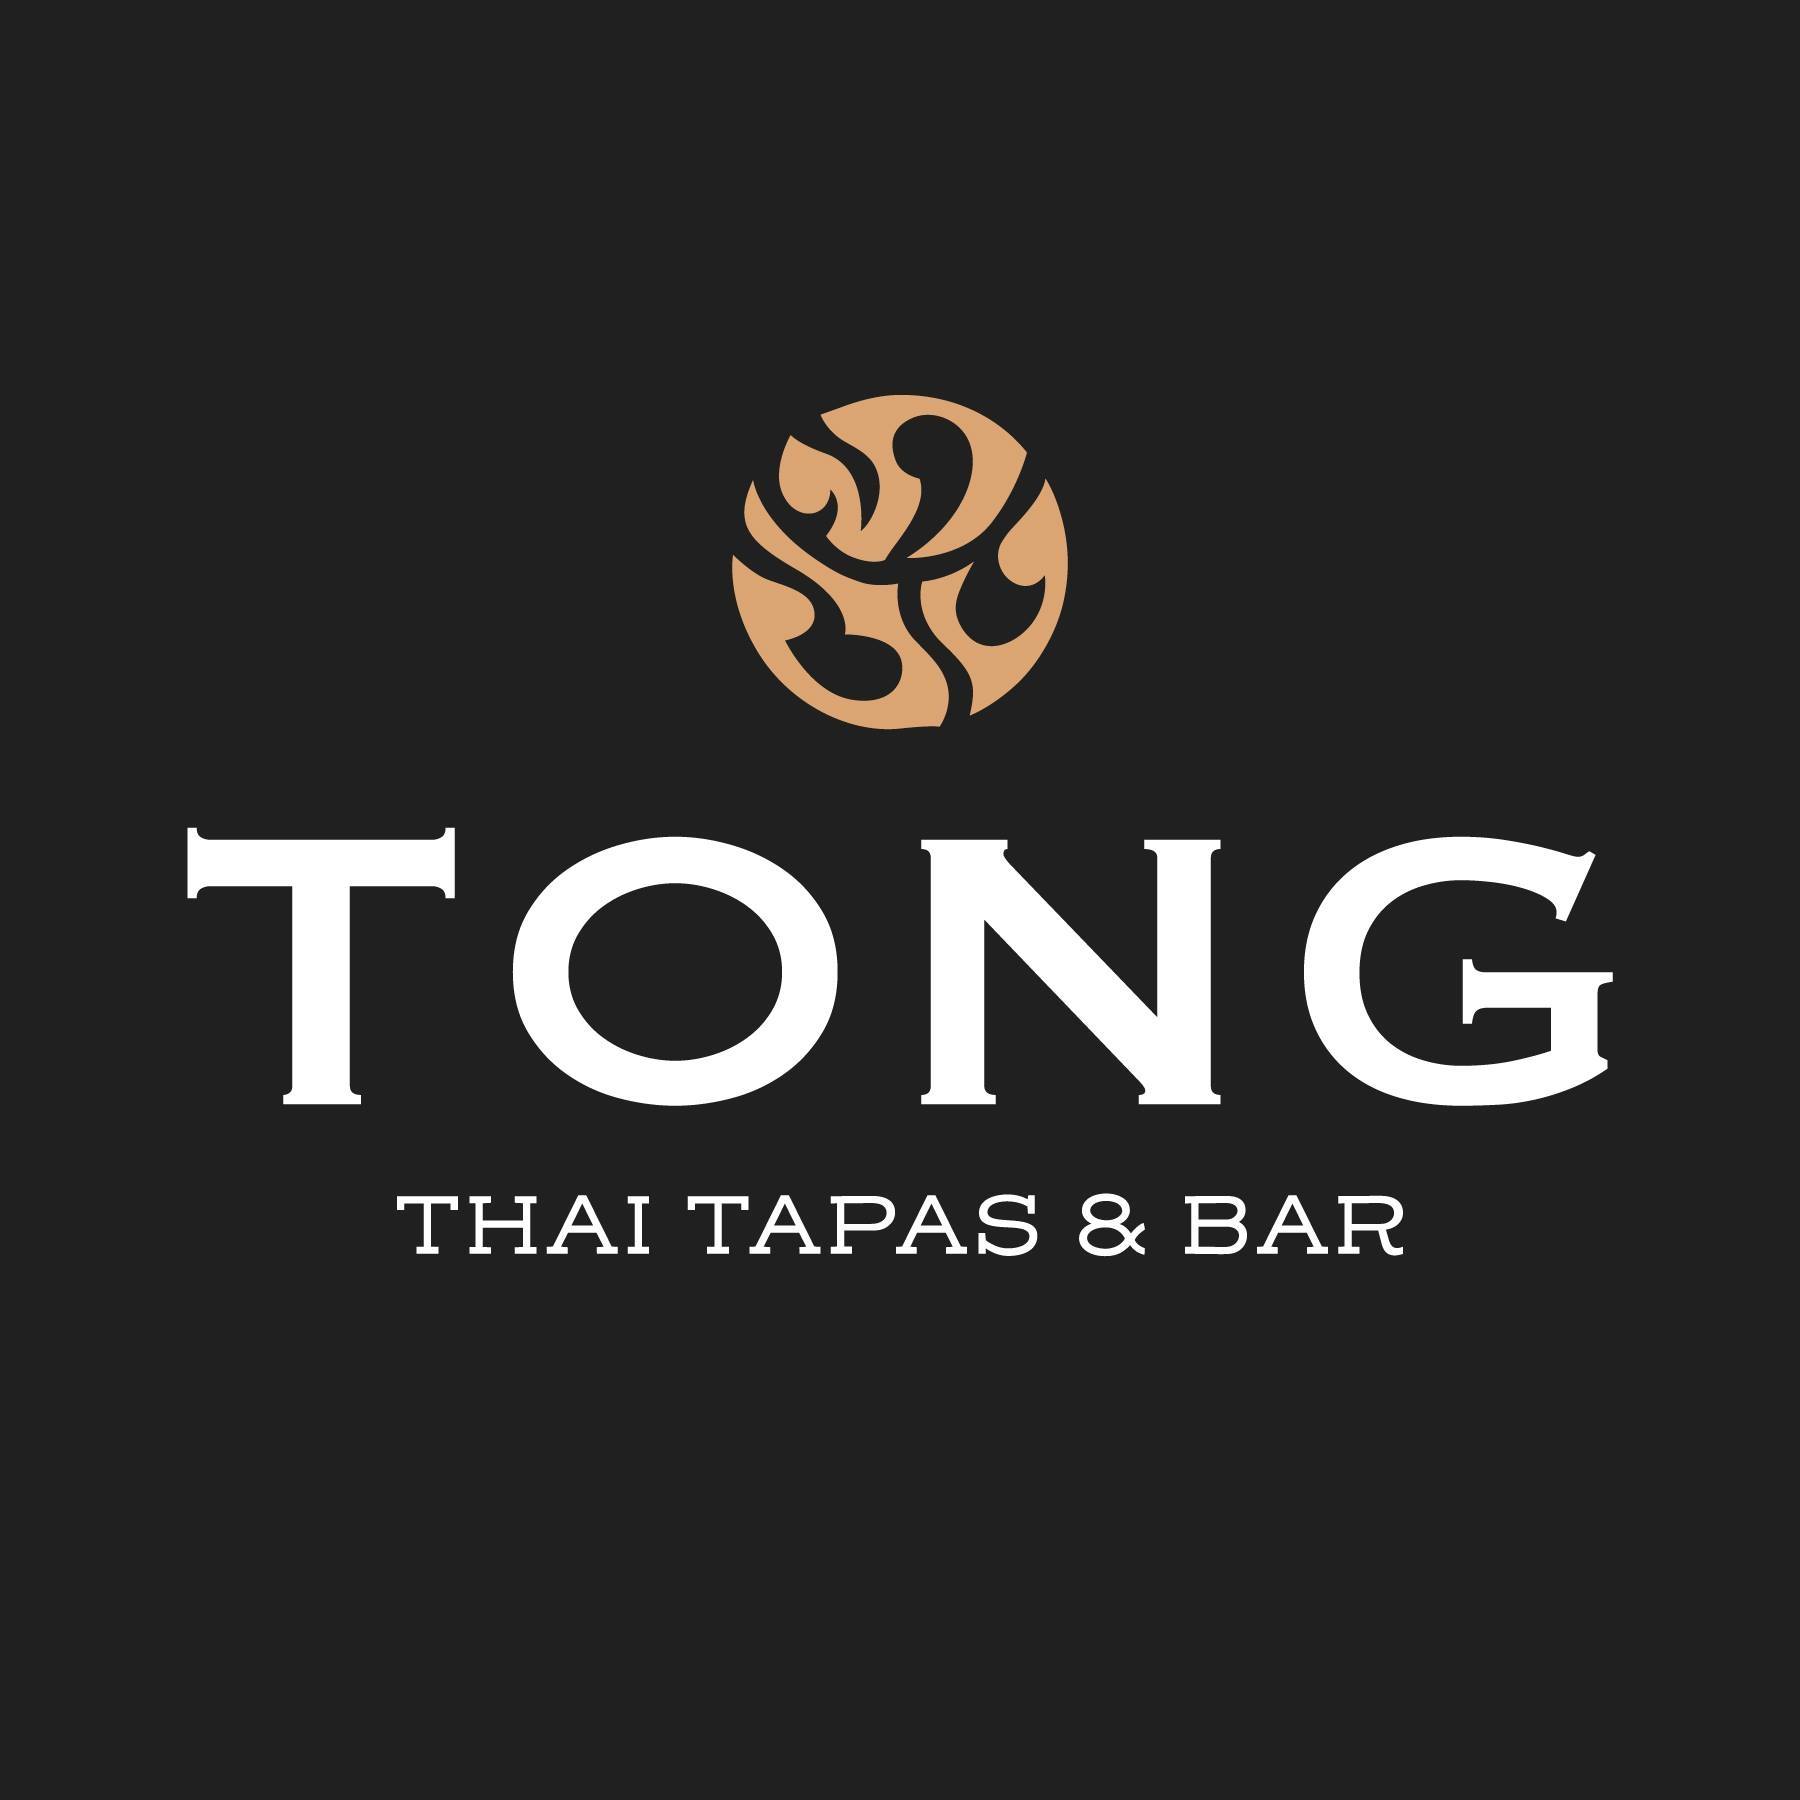 Tong restaurant located in BROOKLYN, NY